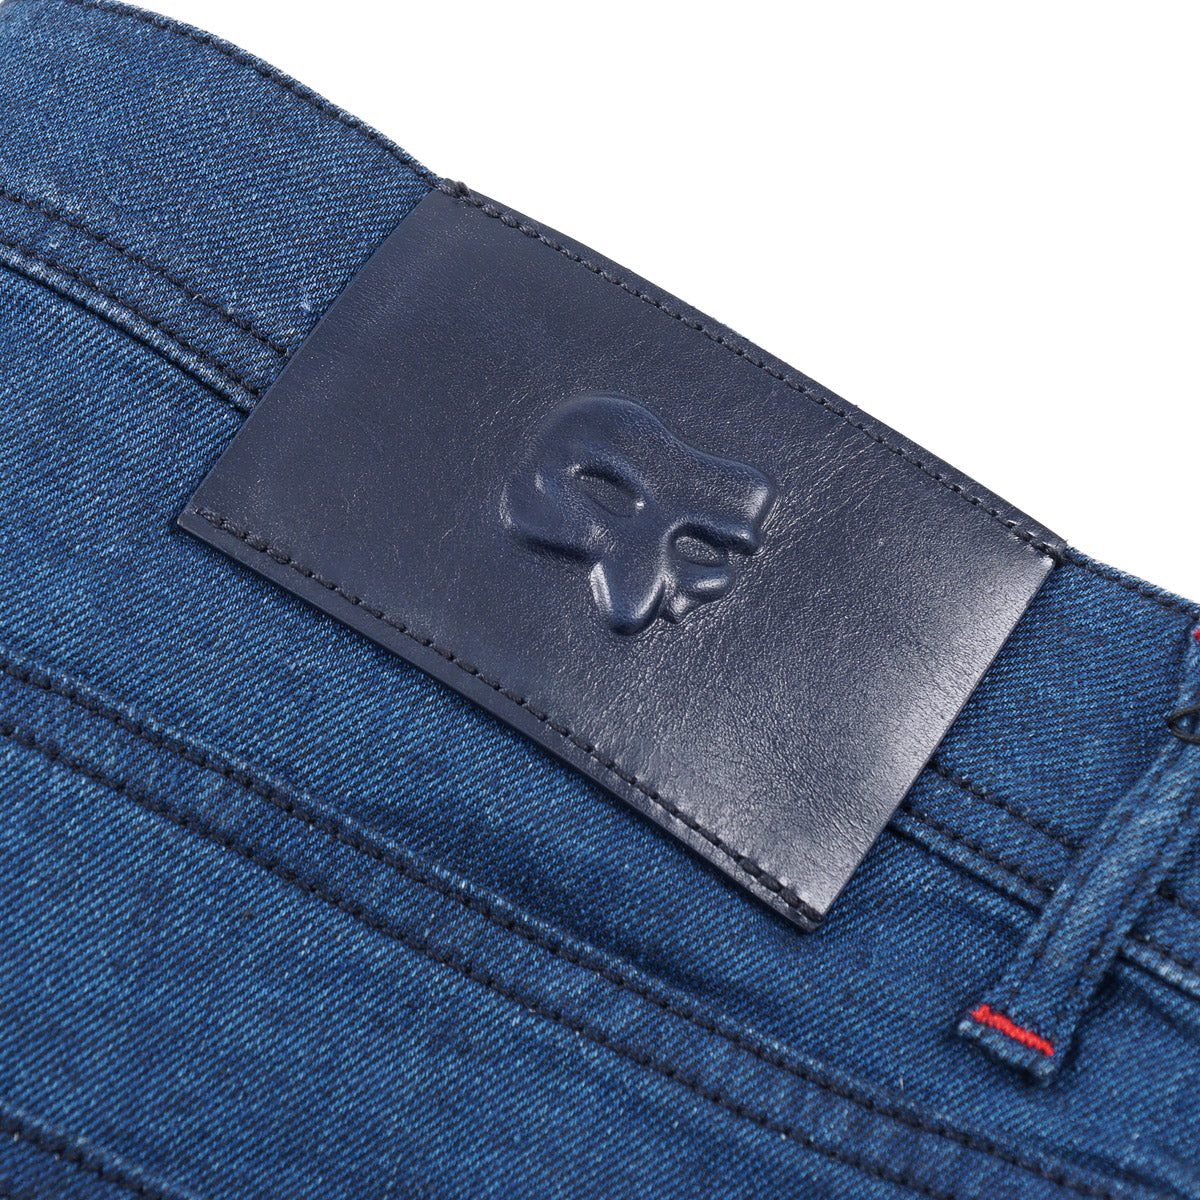 Marco Pescarolo Linen and Cotton Jeans - Top Shelf Apparel